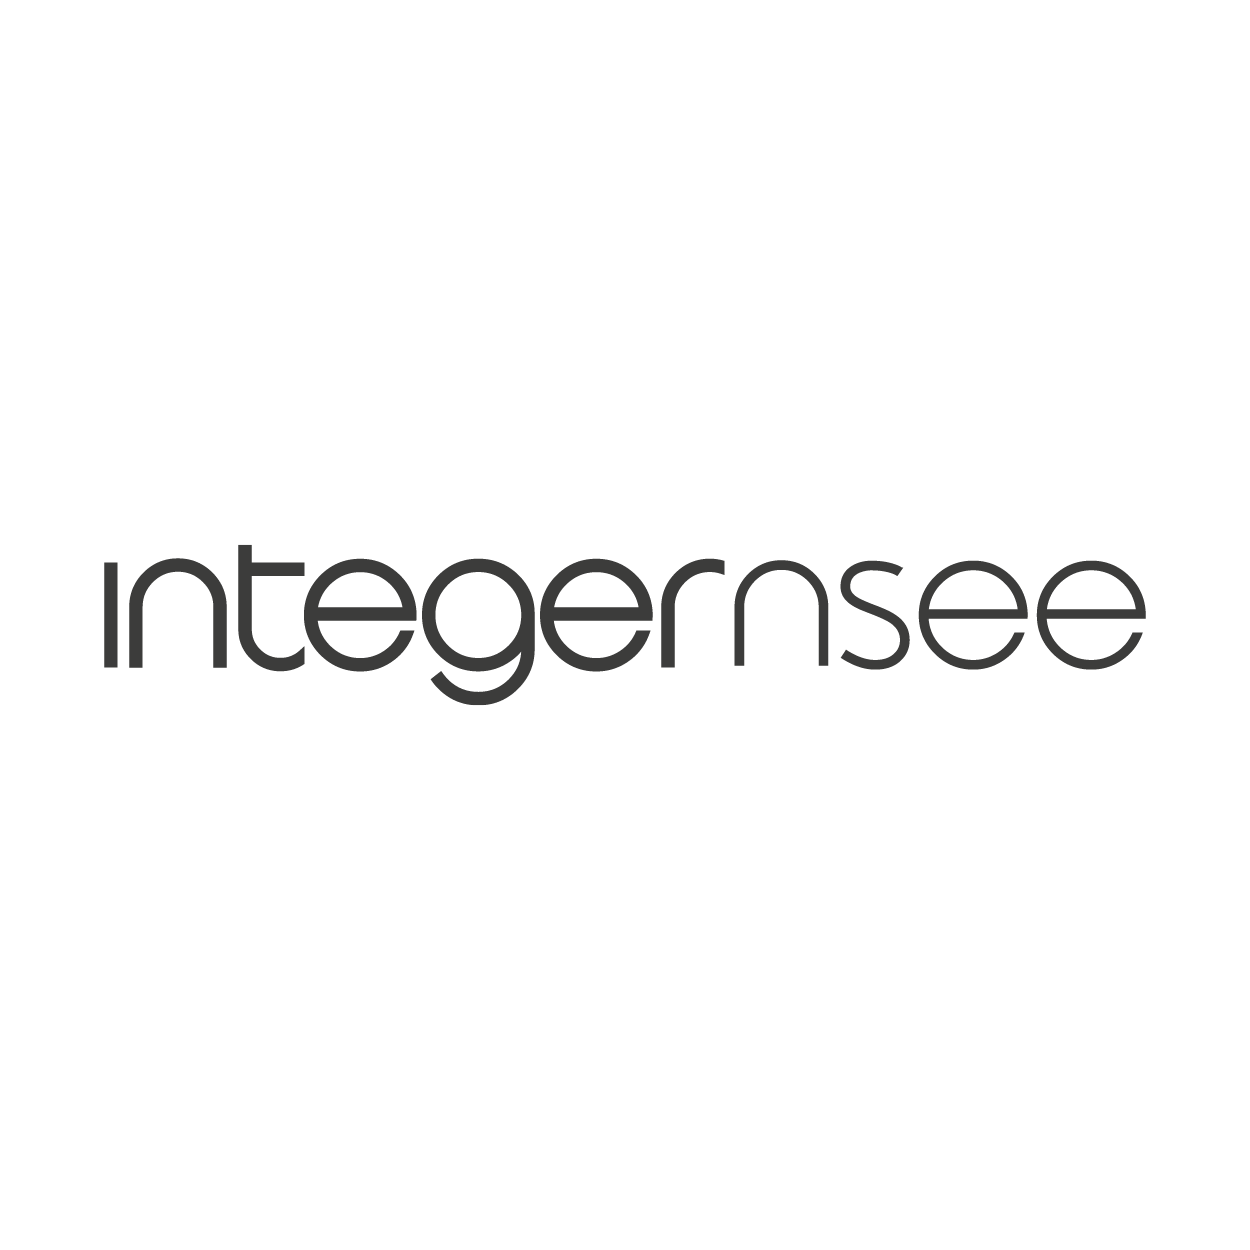 Integernsee Logo